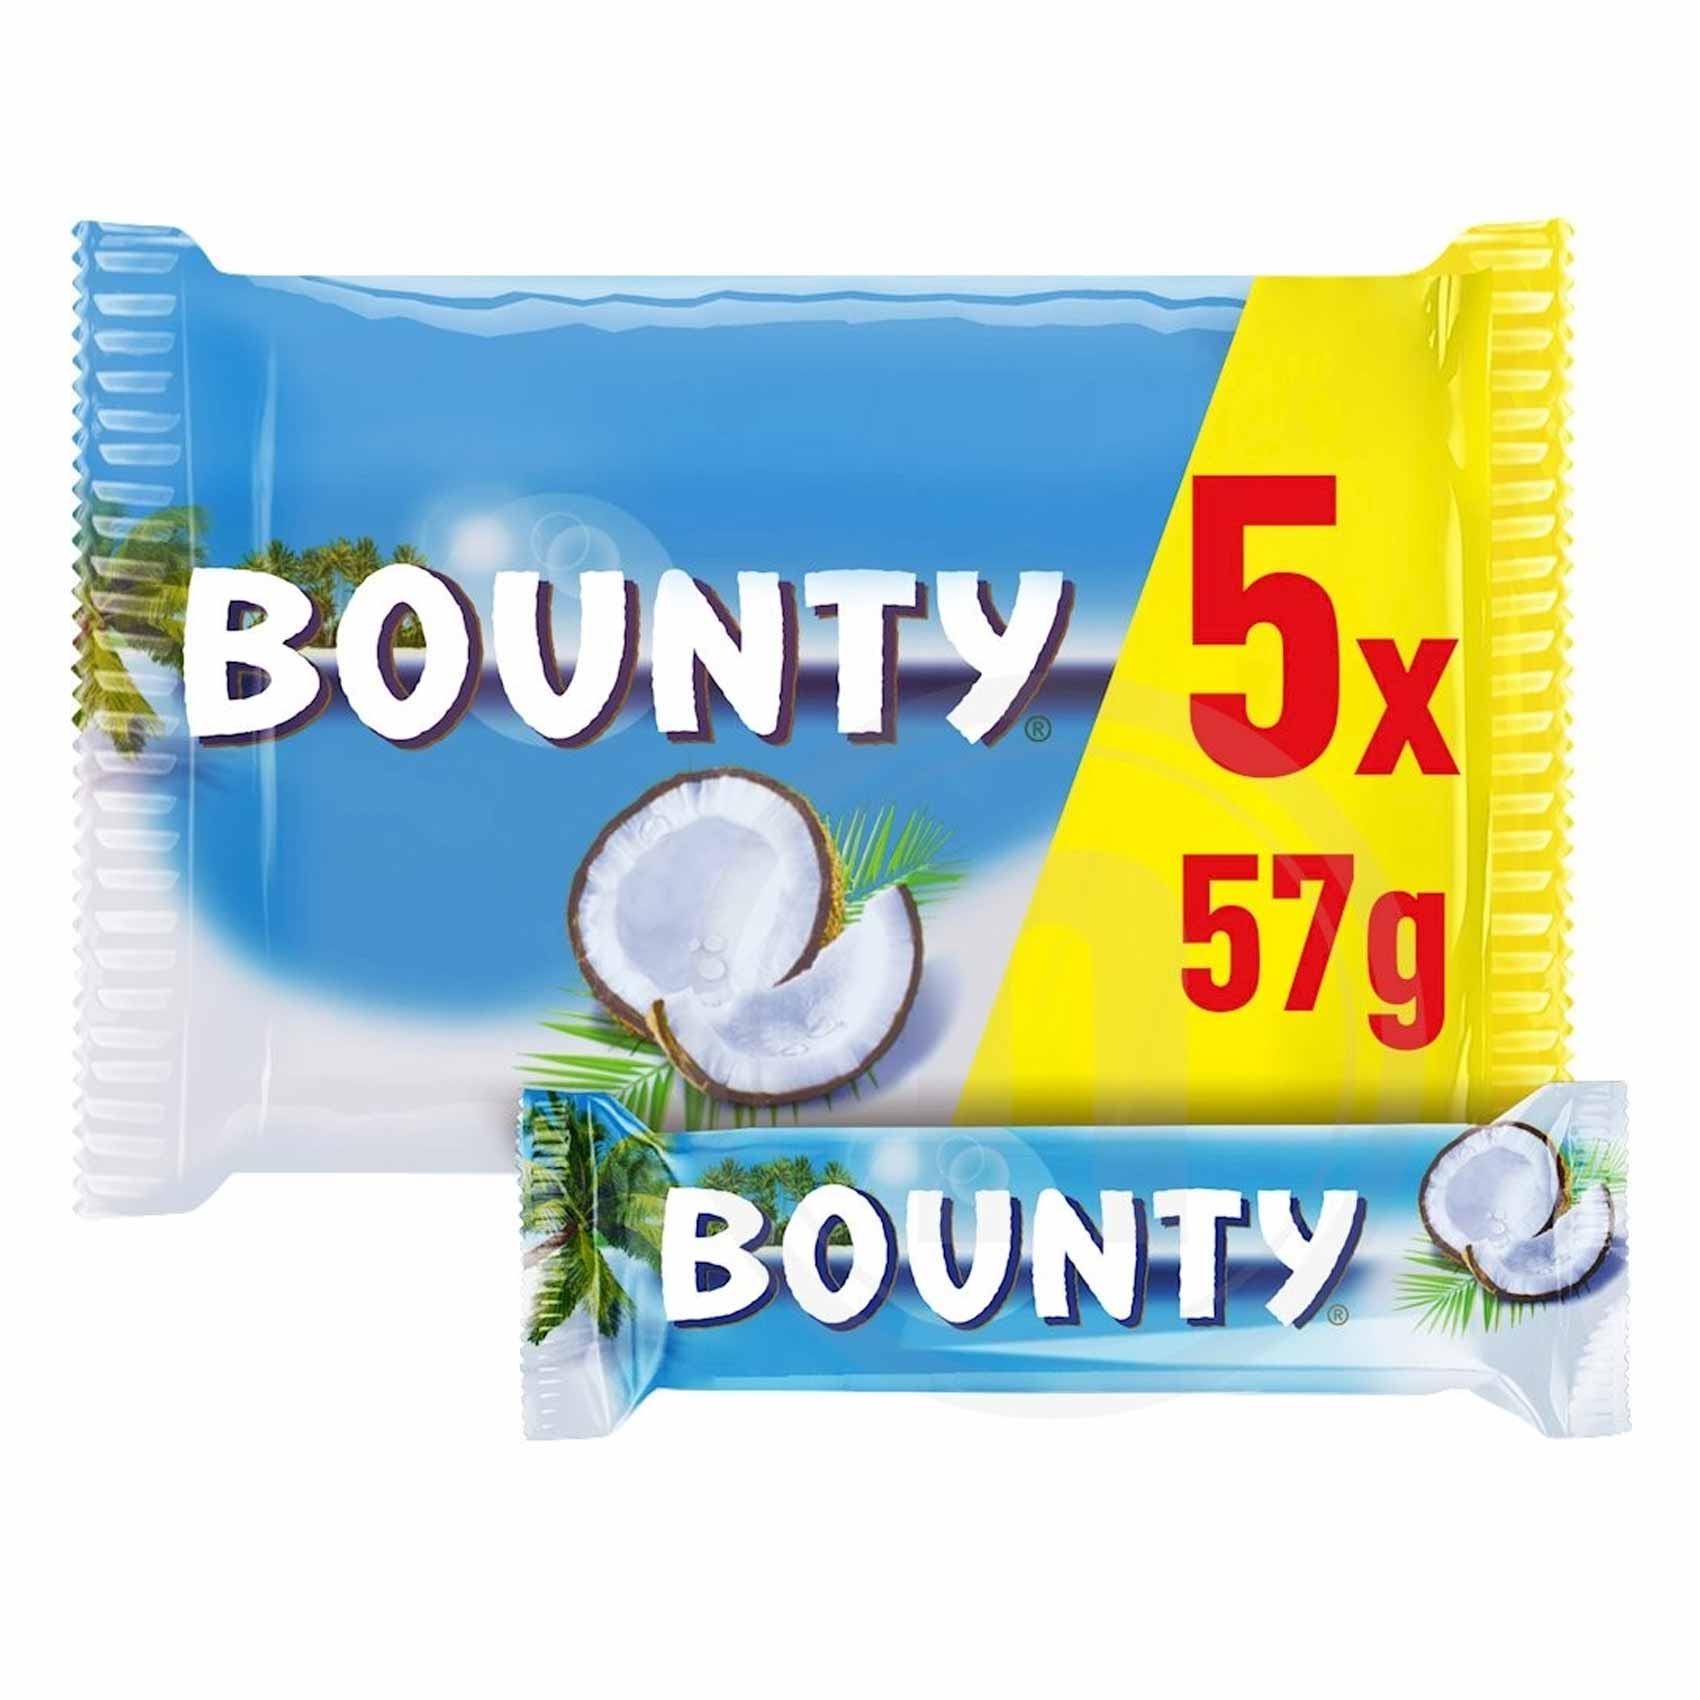 Bounty 5X57G